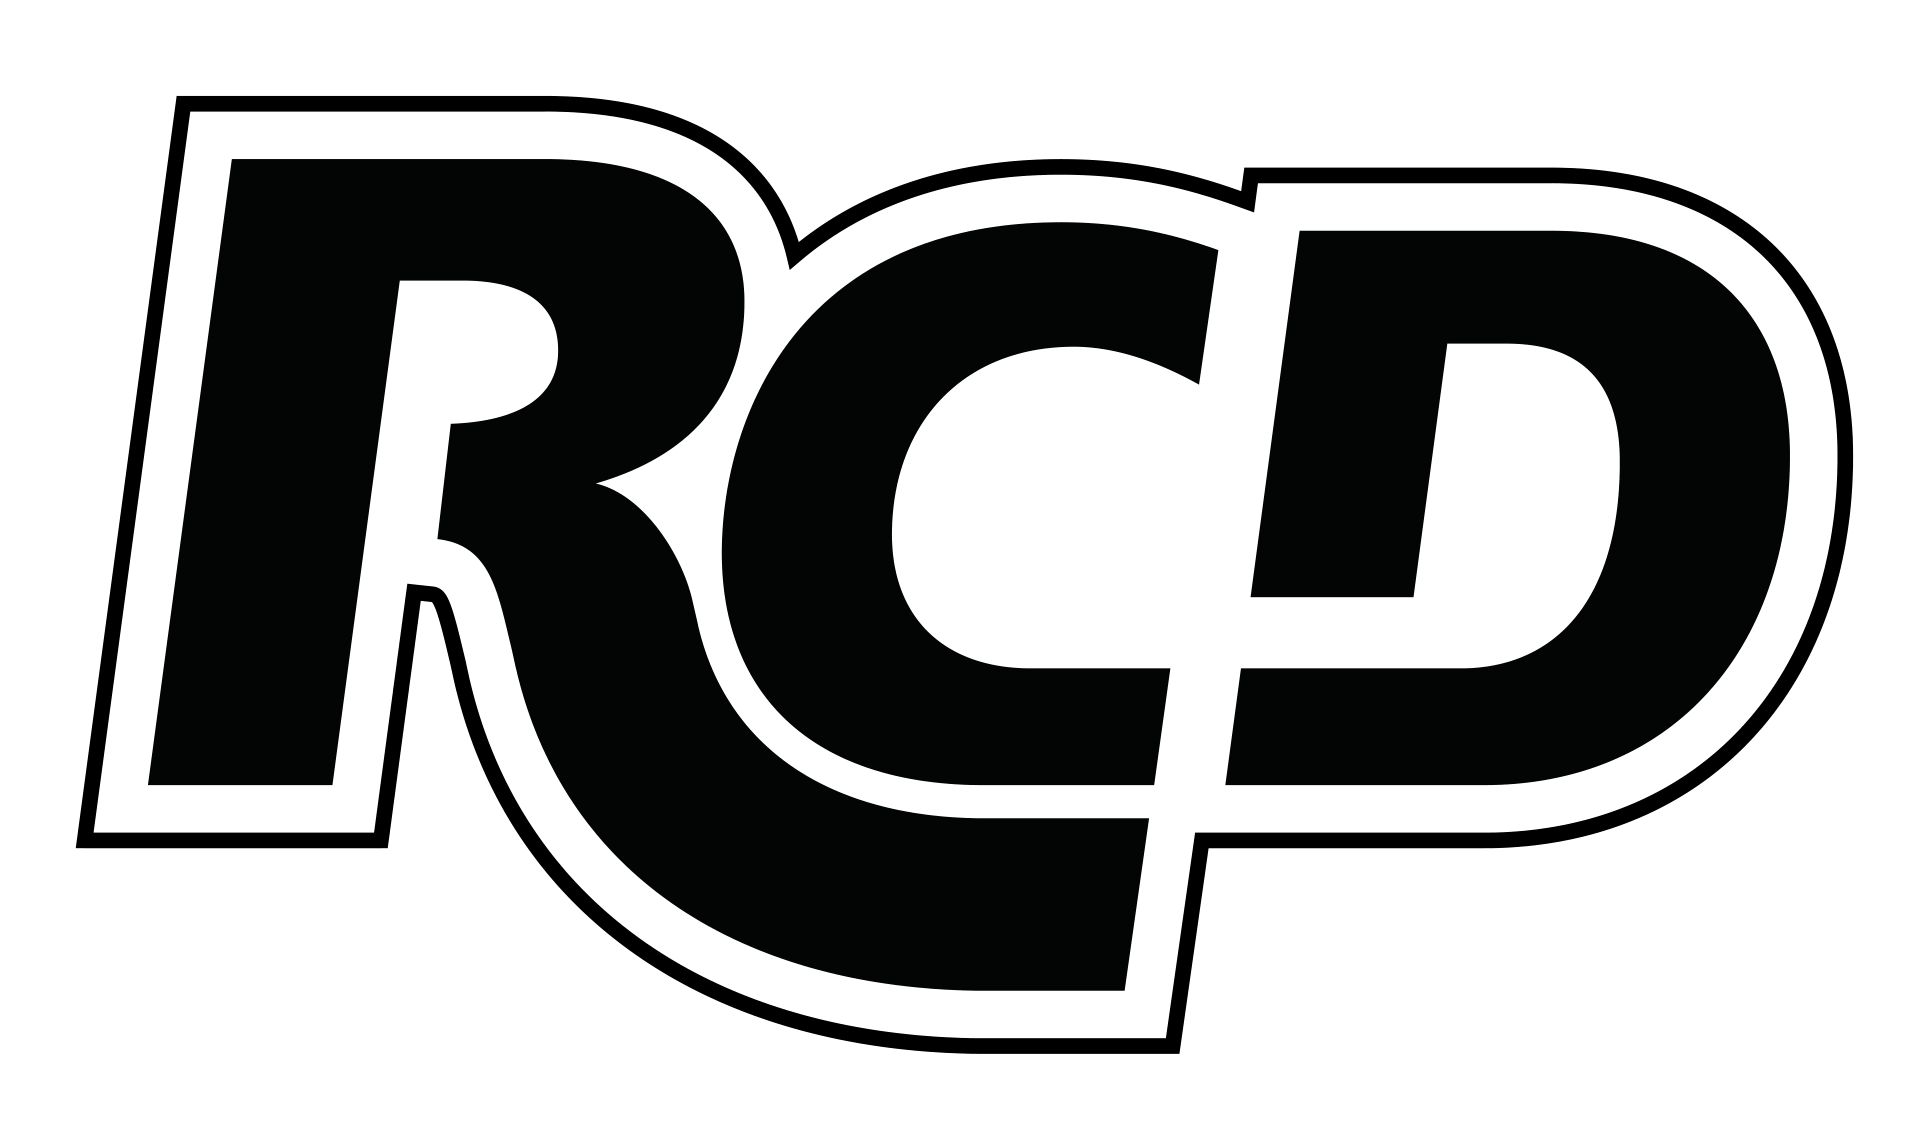 rcd-logo